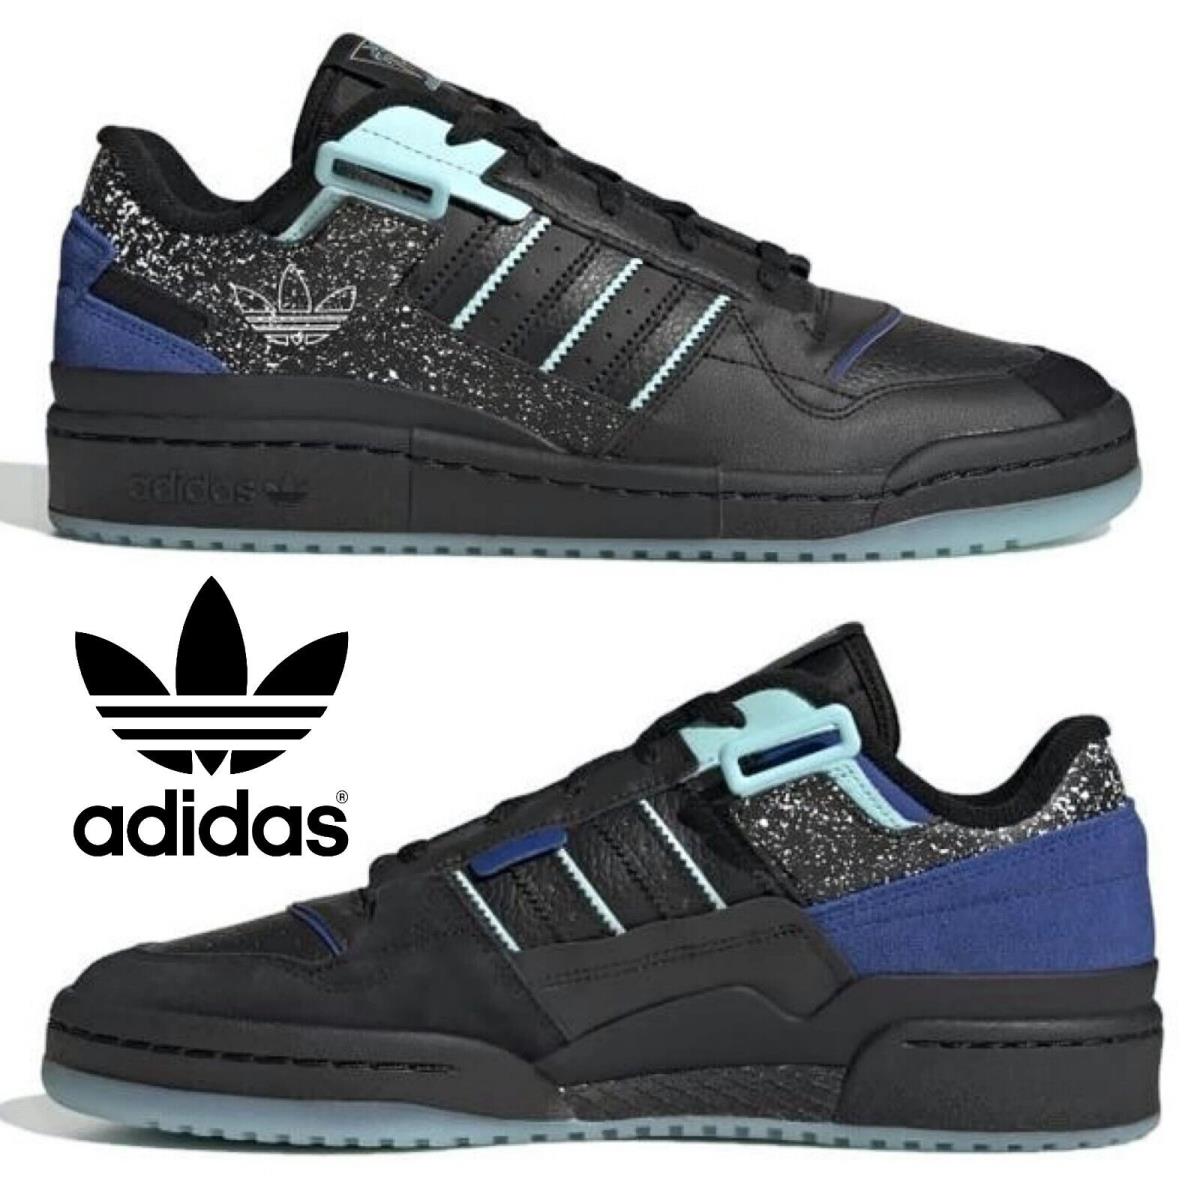 Adidas Originals Forum Exhibit Low Men`s Sneakers Comfort Casual Shoes Black - Black , Core Black / Clear Aqua / Blue Manufacturer